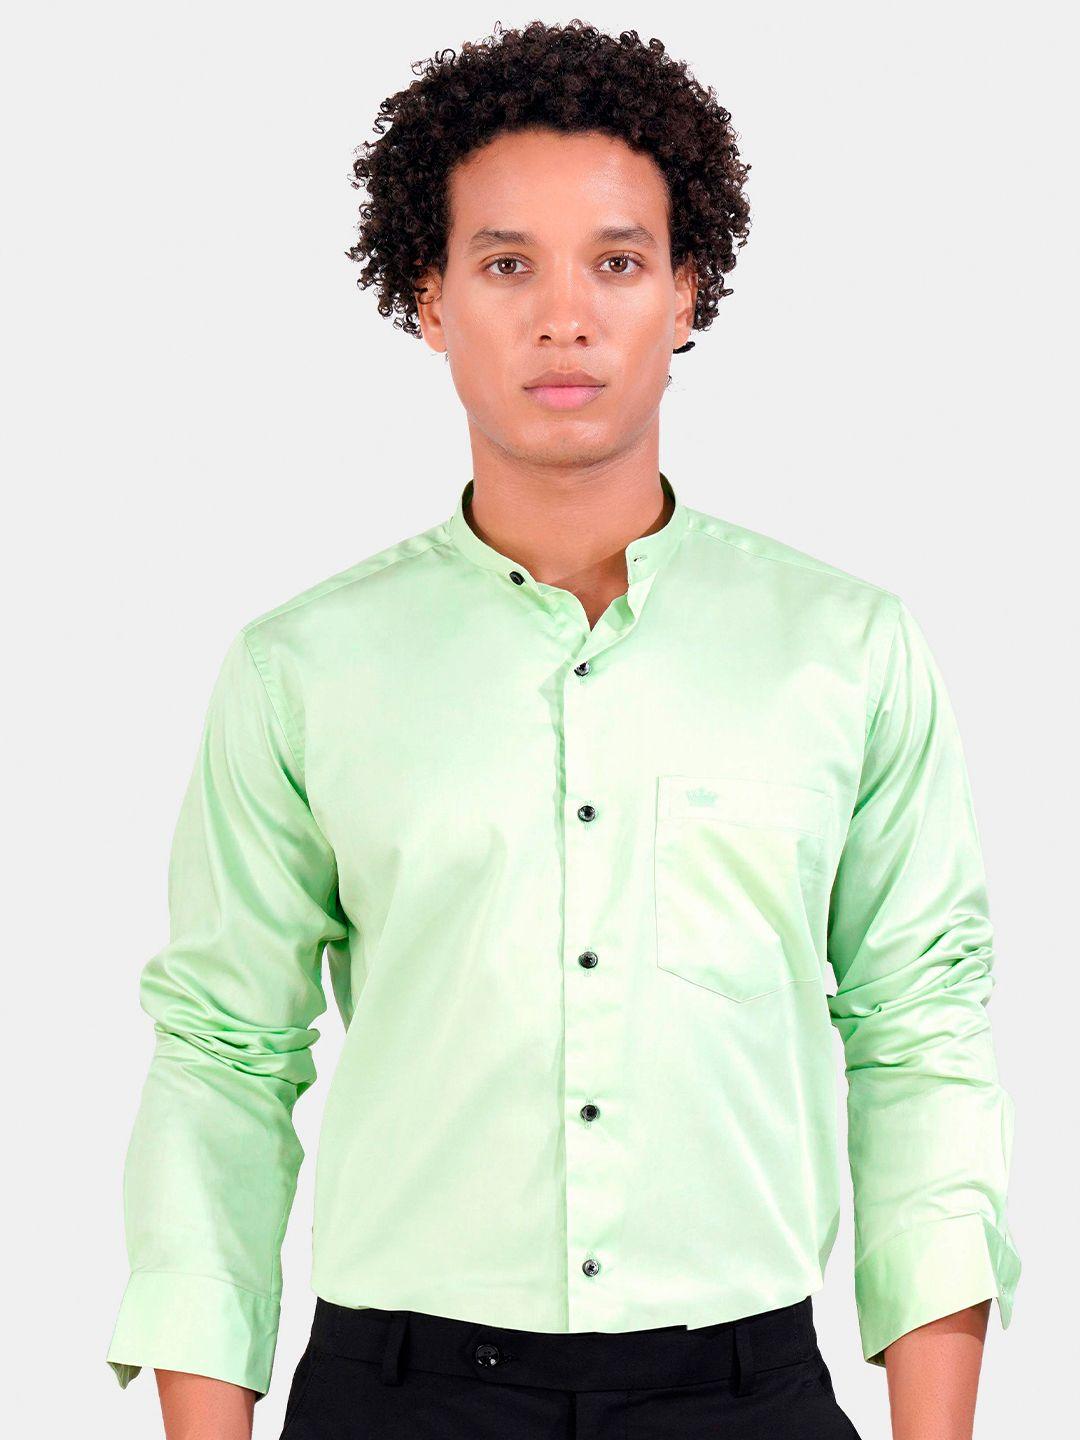 french crown men green standard opaque formal shirt